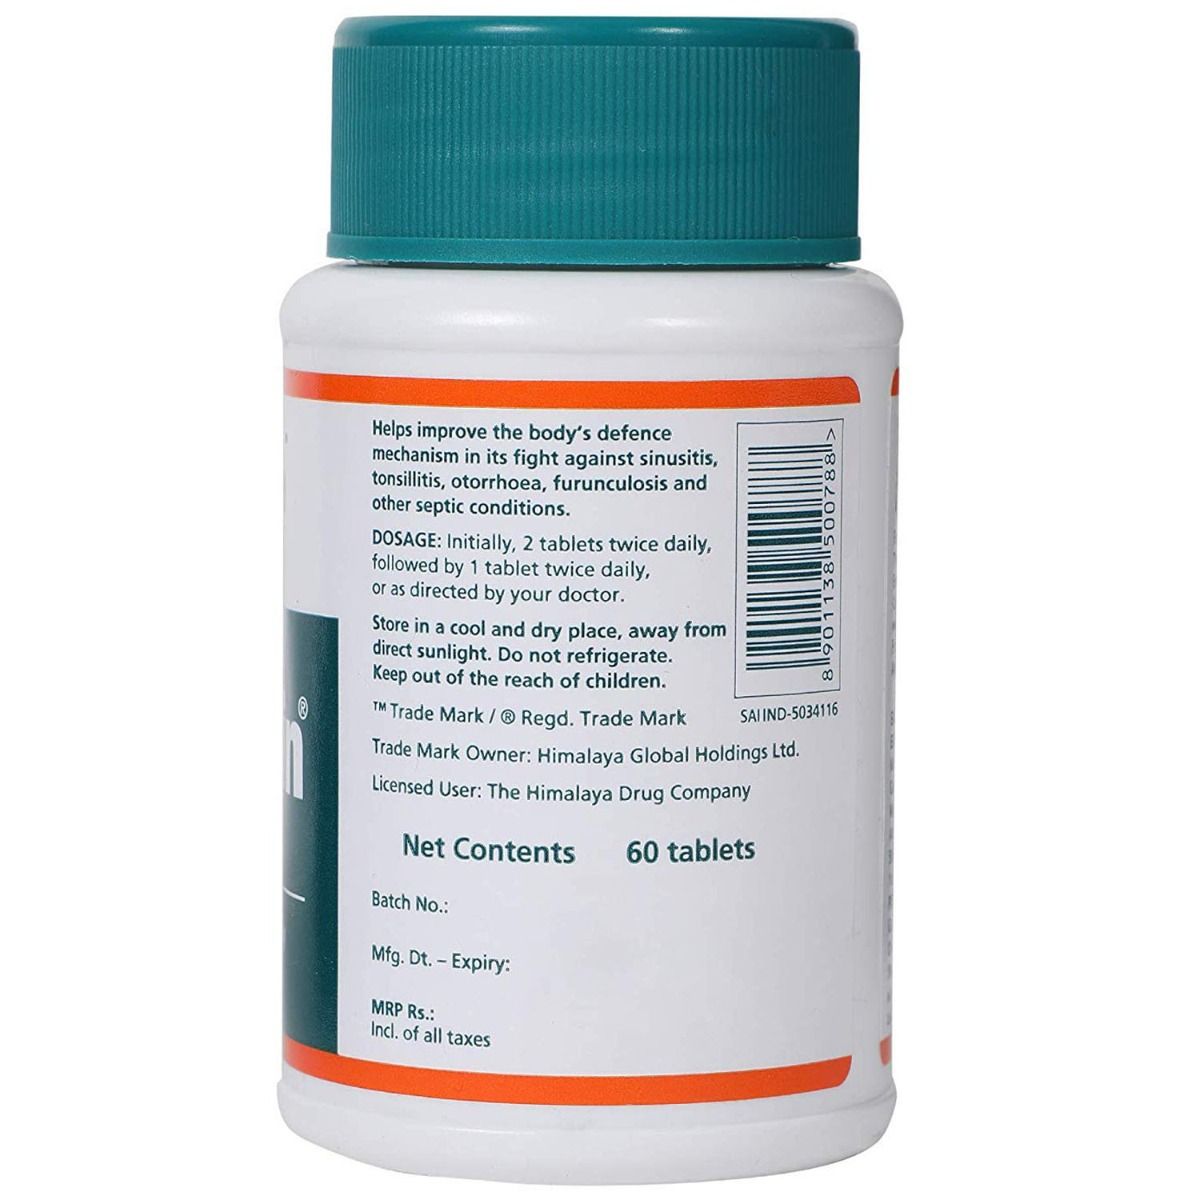 Himalaya Septilin, 60 Tablets, Pack of 1 